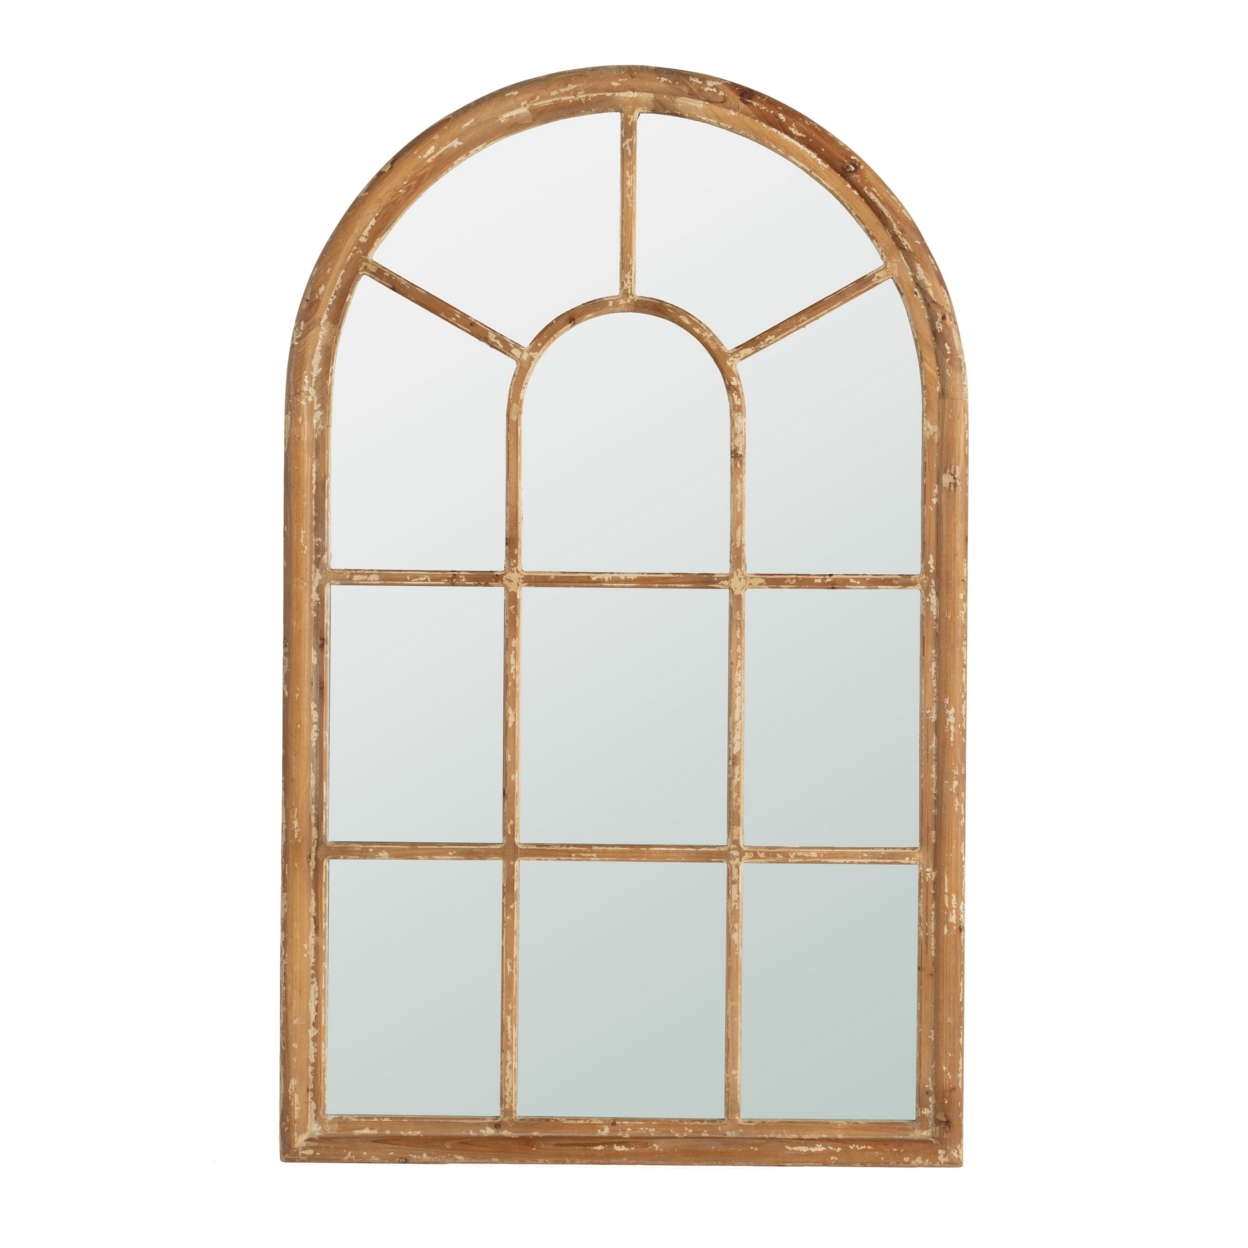 54 Inch Wall Mirror With Window Pane Design, Fir Wood, Distressed Brown- Saltoro Sherpi